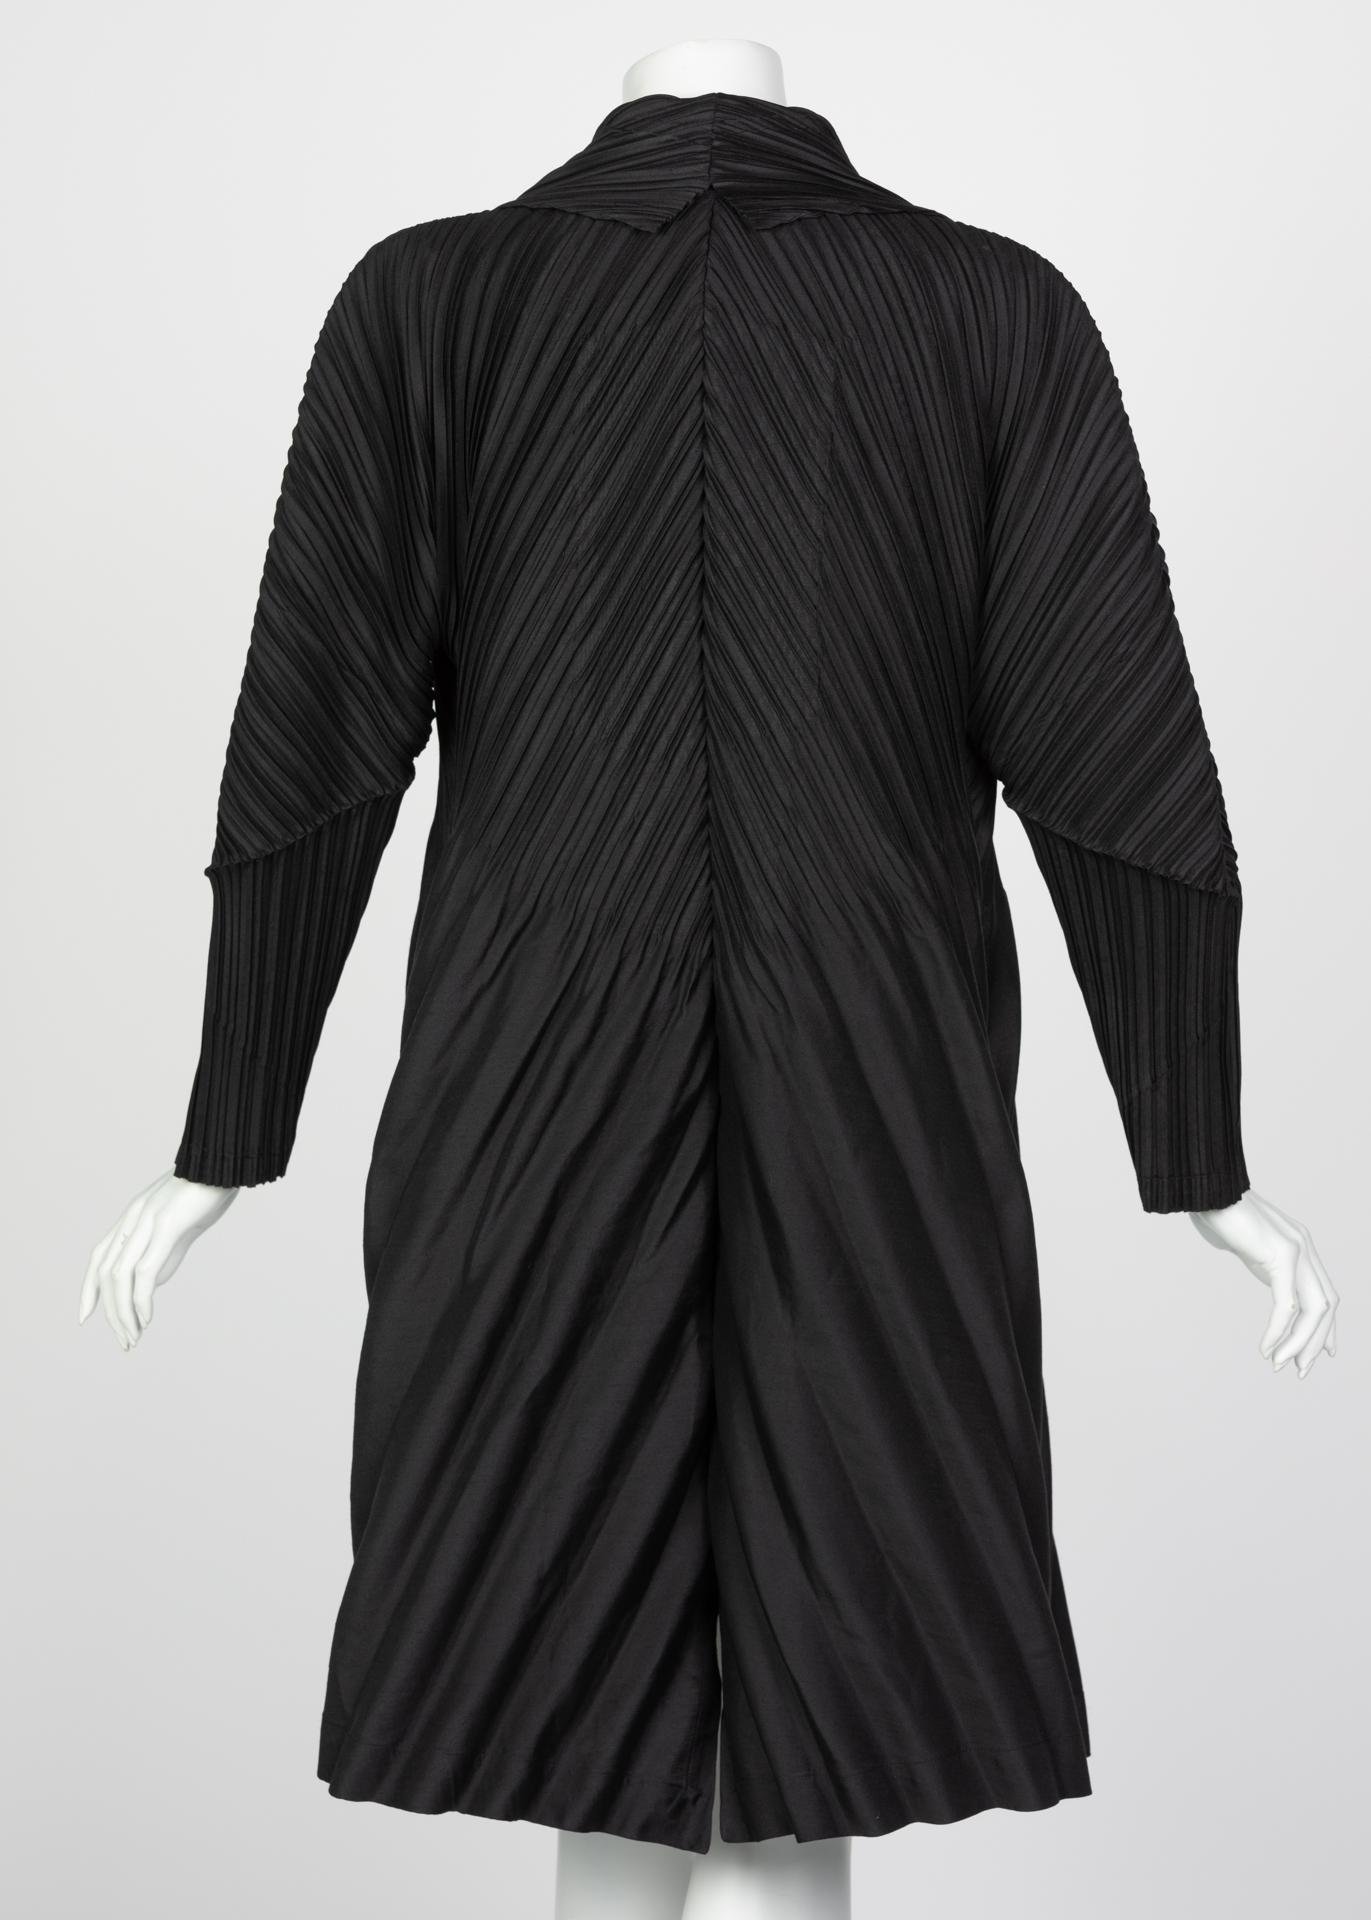 Issey Miyake Black Sculptural Pleated Cocoon Coat 1